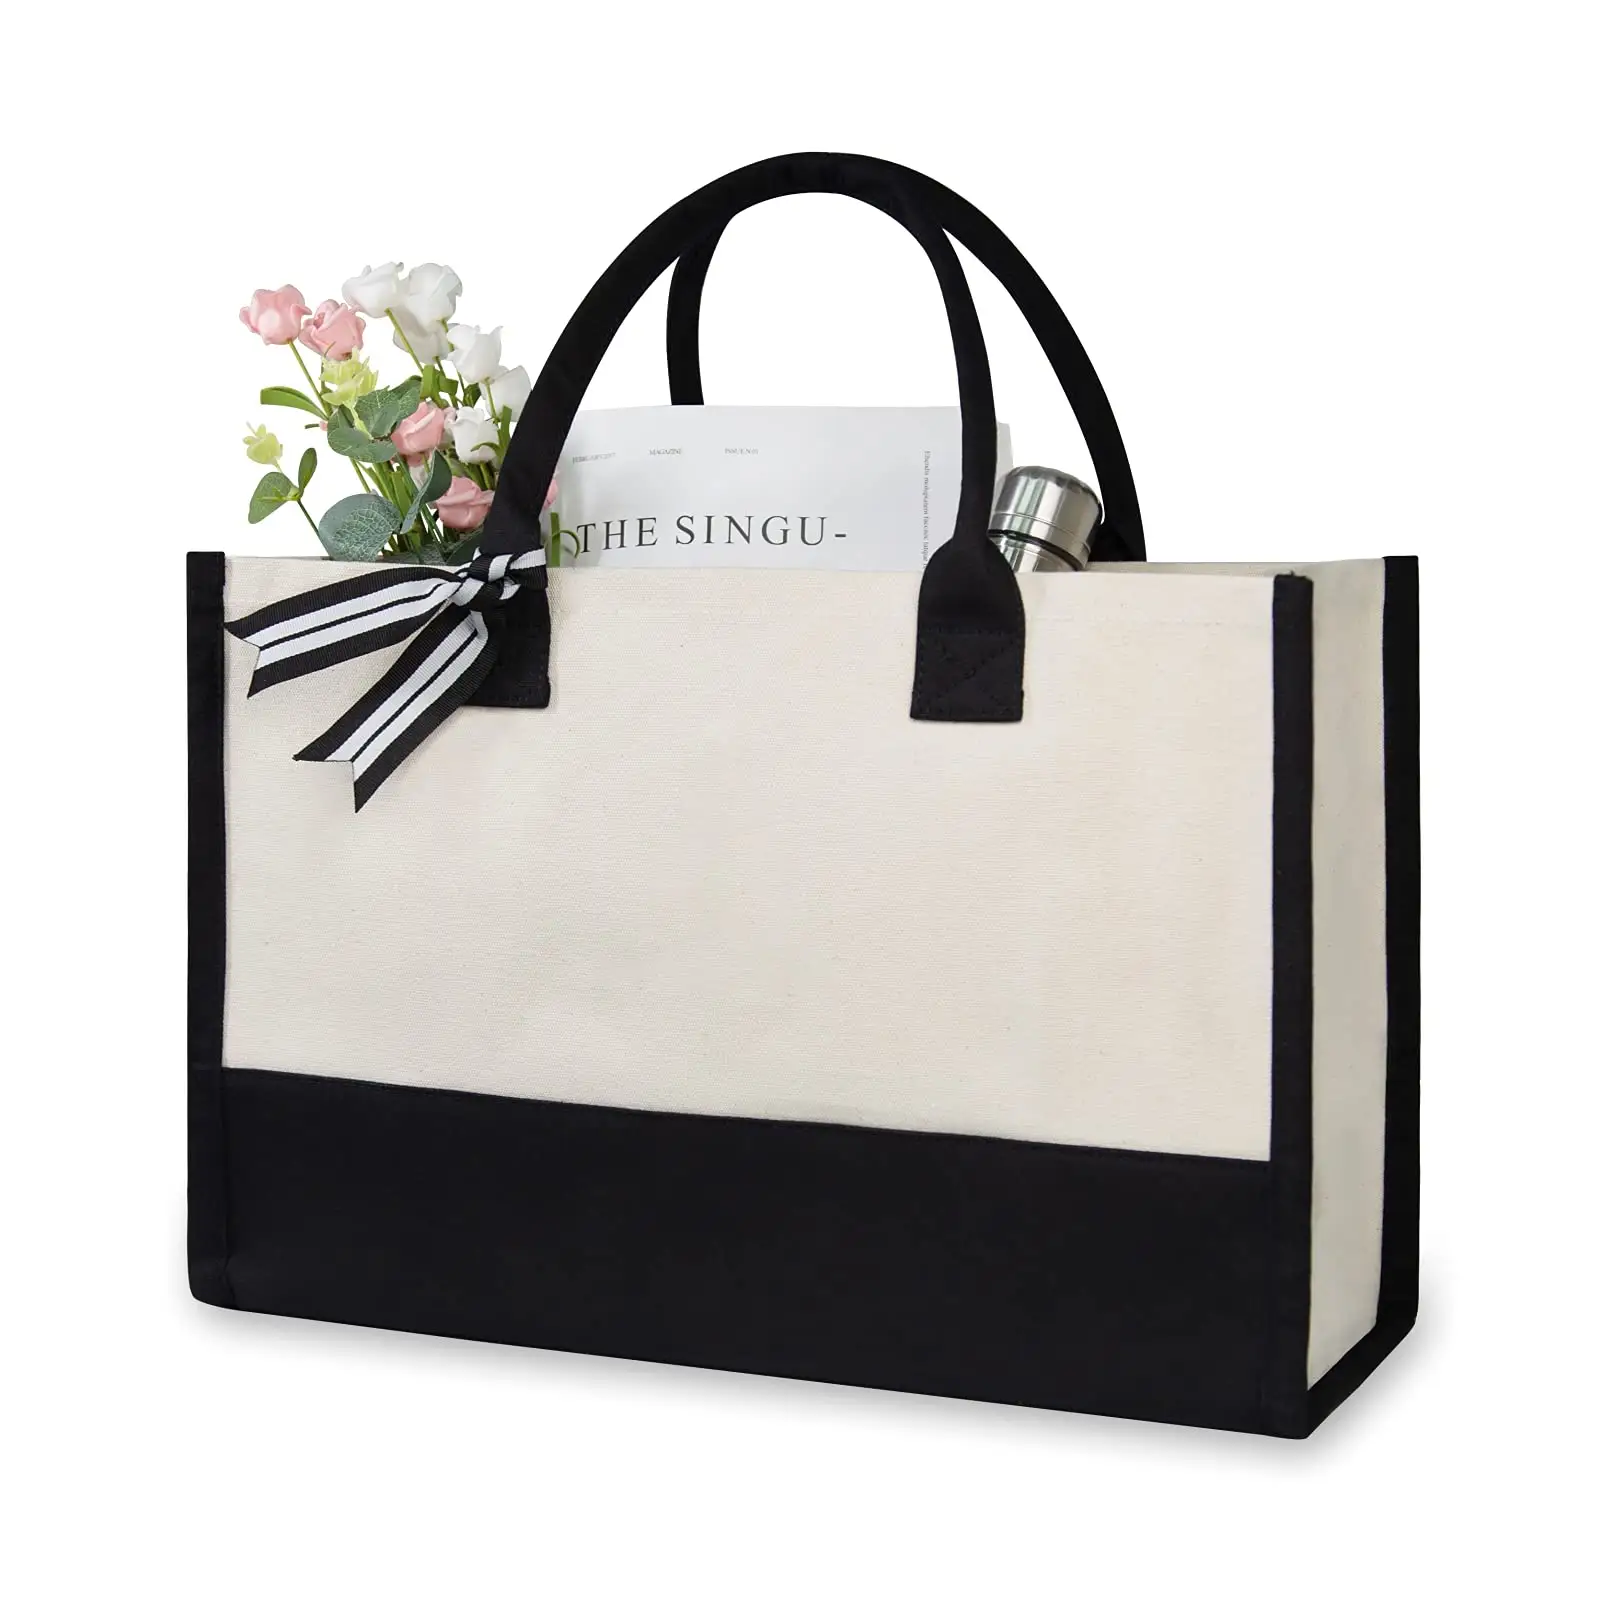 Amazon Fashionable Multi Purpose Cream Color Women Handbags Cotton Shopping beach Bag Two-Tone Canvas Tote Bag wit Black Handles